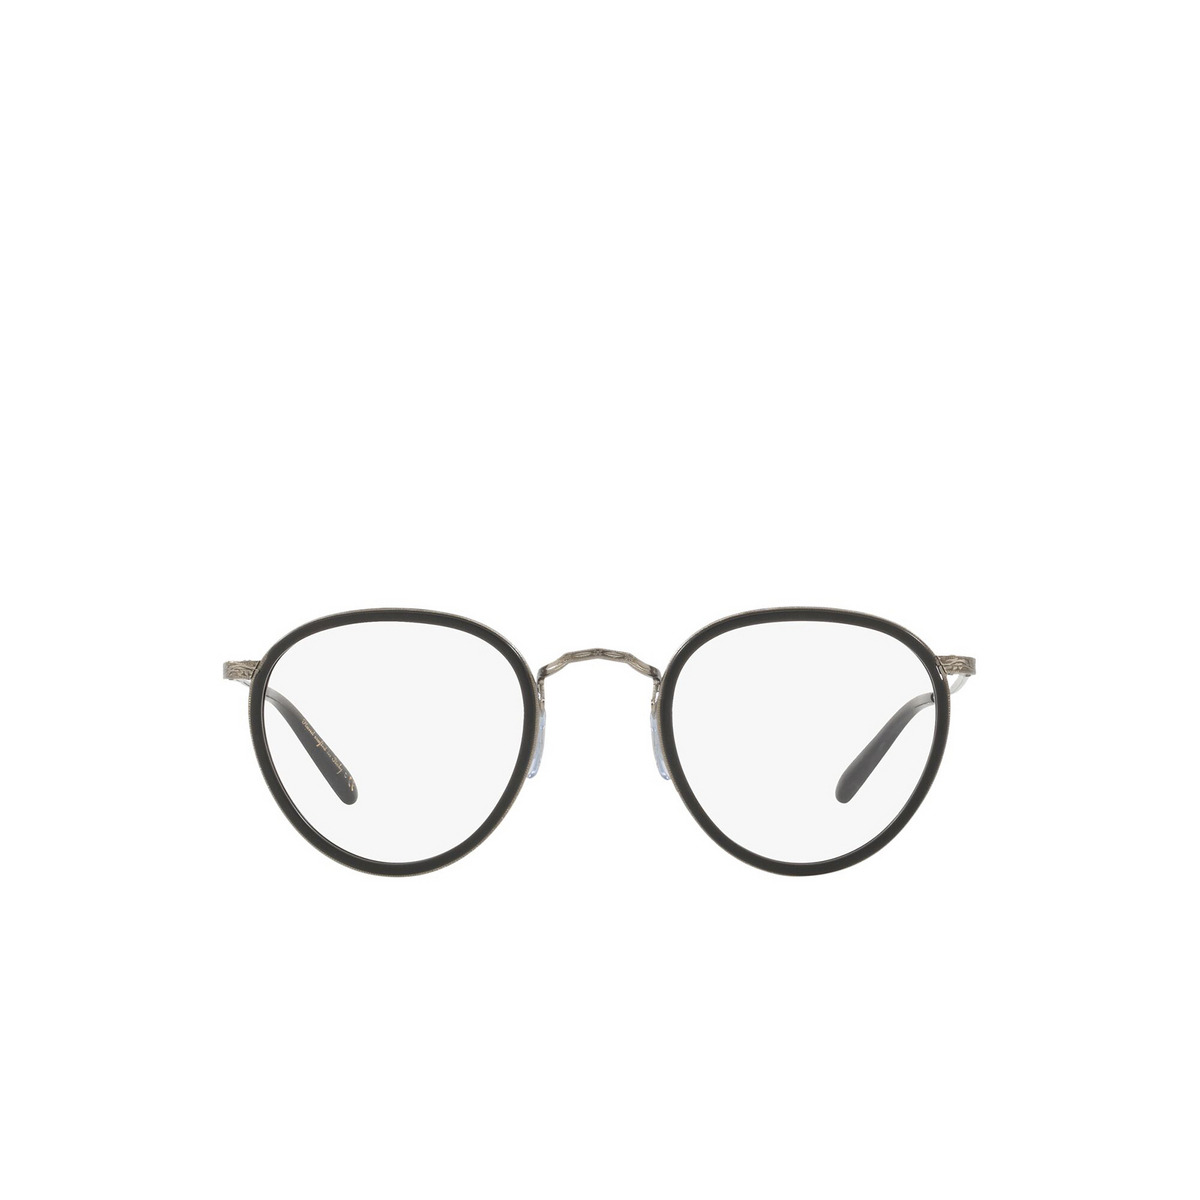 Oliver Peoples® Round Eyeglasses: Mp-2 OV1104 color Semi Matte Black 5244 - front view.